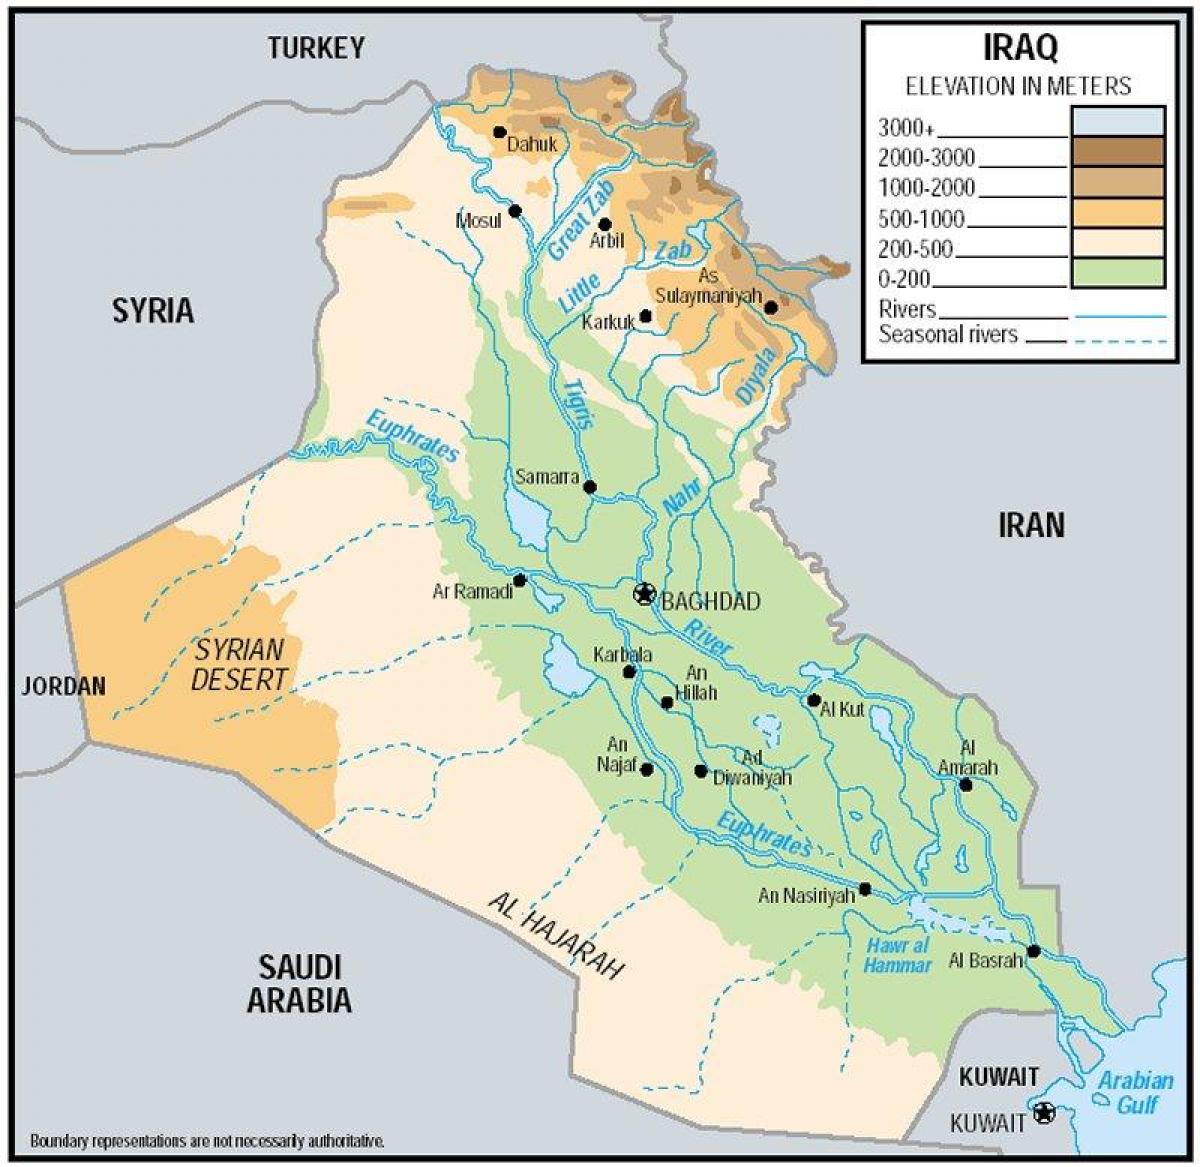 Map of Iraq elevation